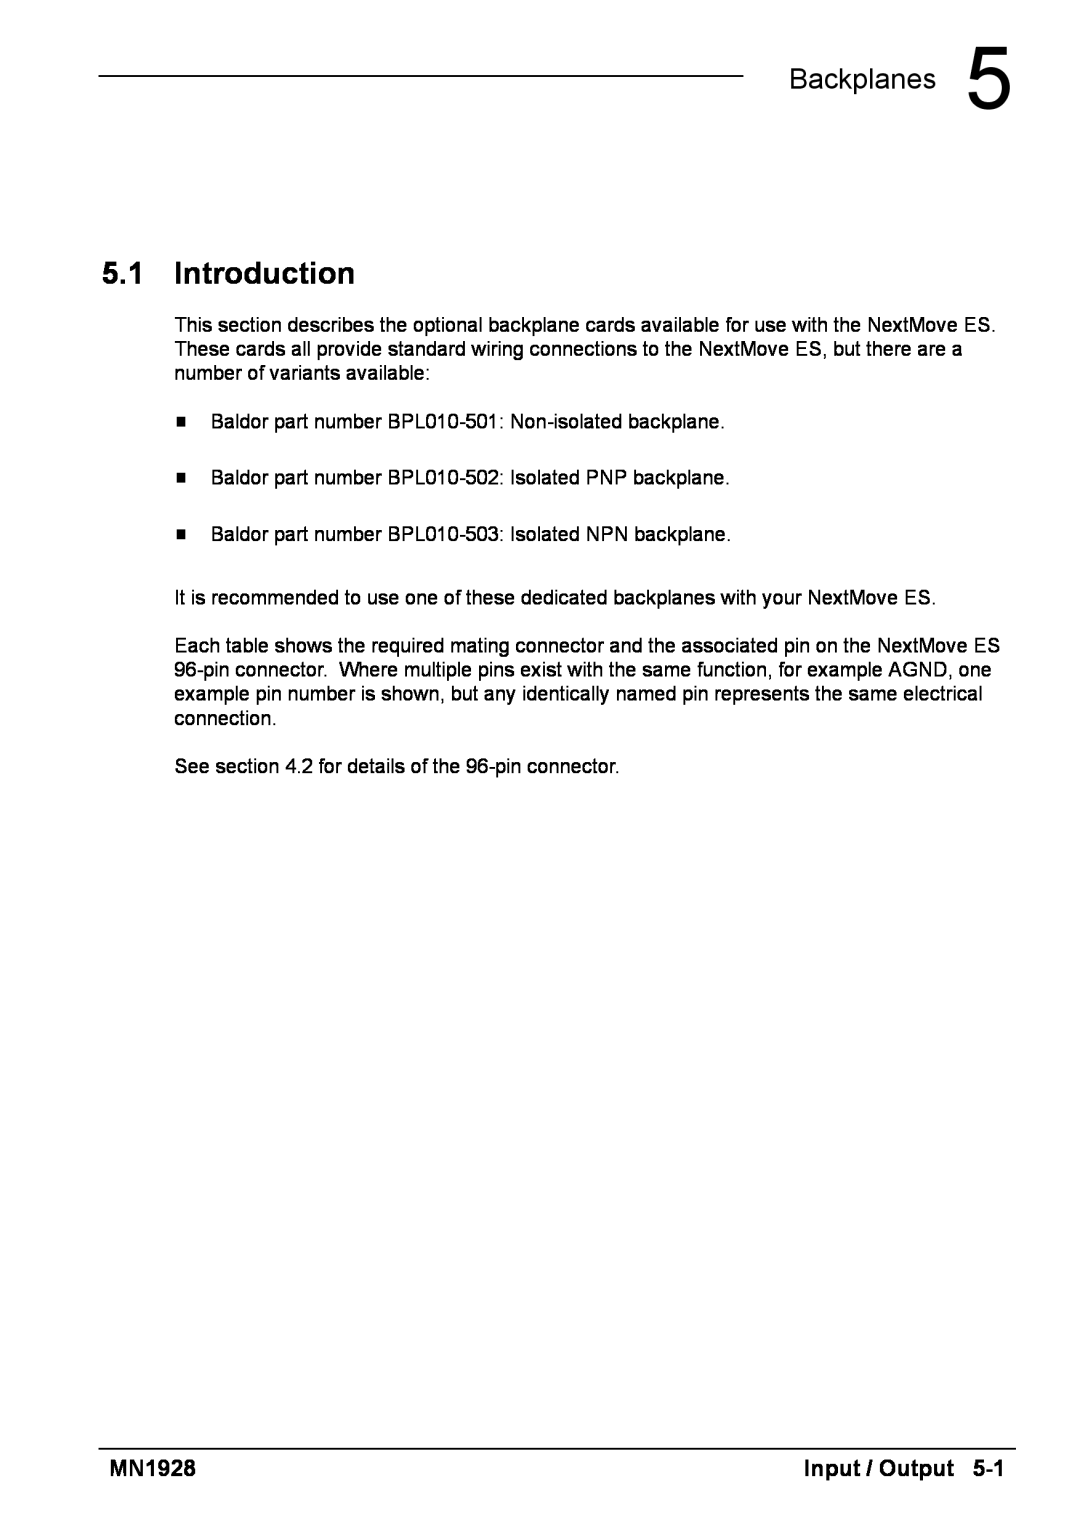 Baldor MN1928 installation manual Introduction, Backplanes, Input / Output 